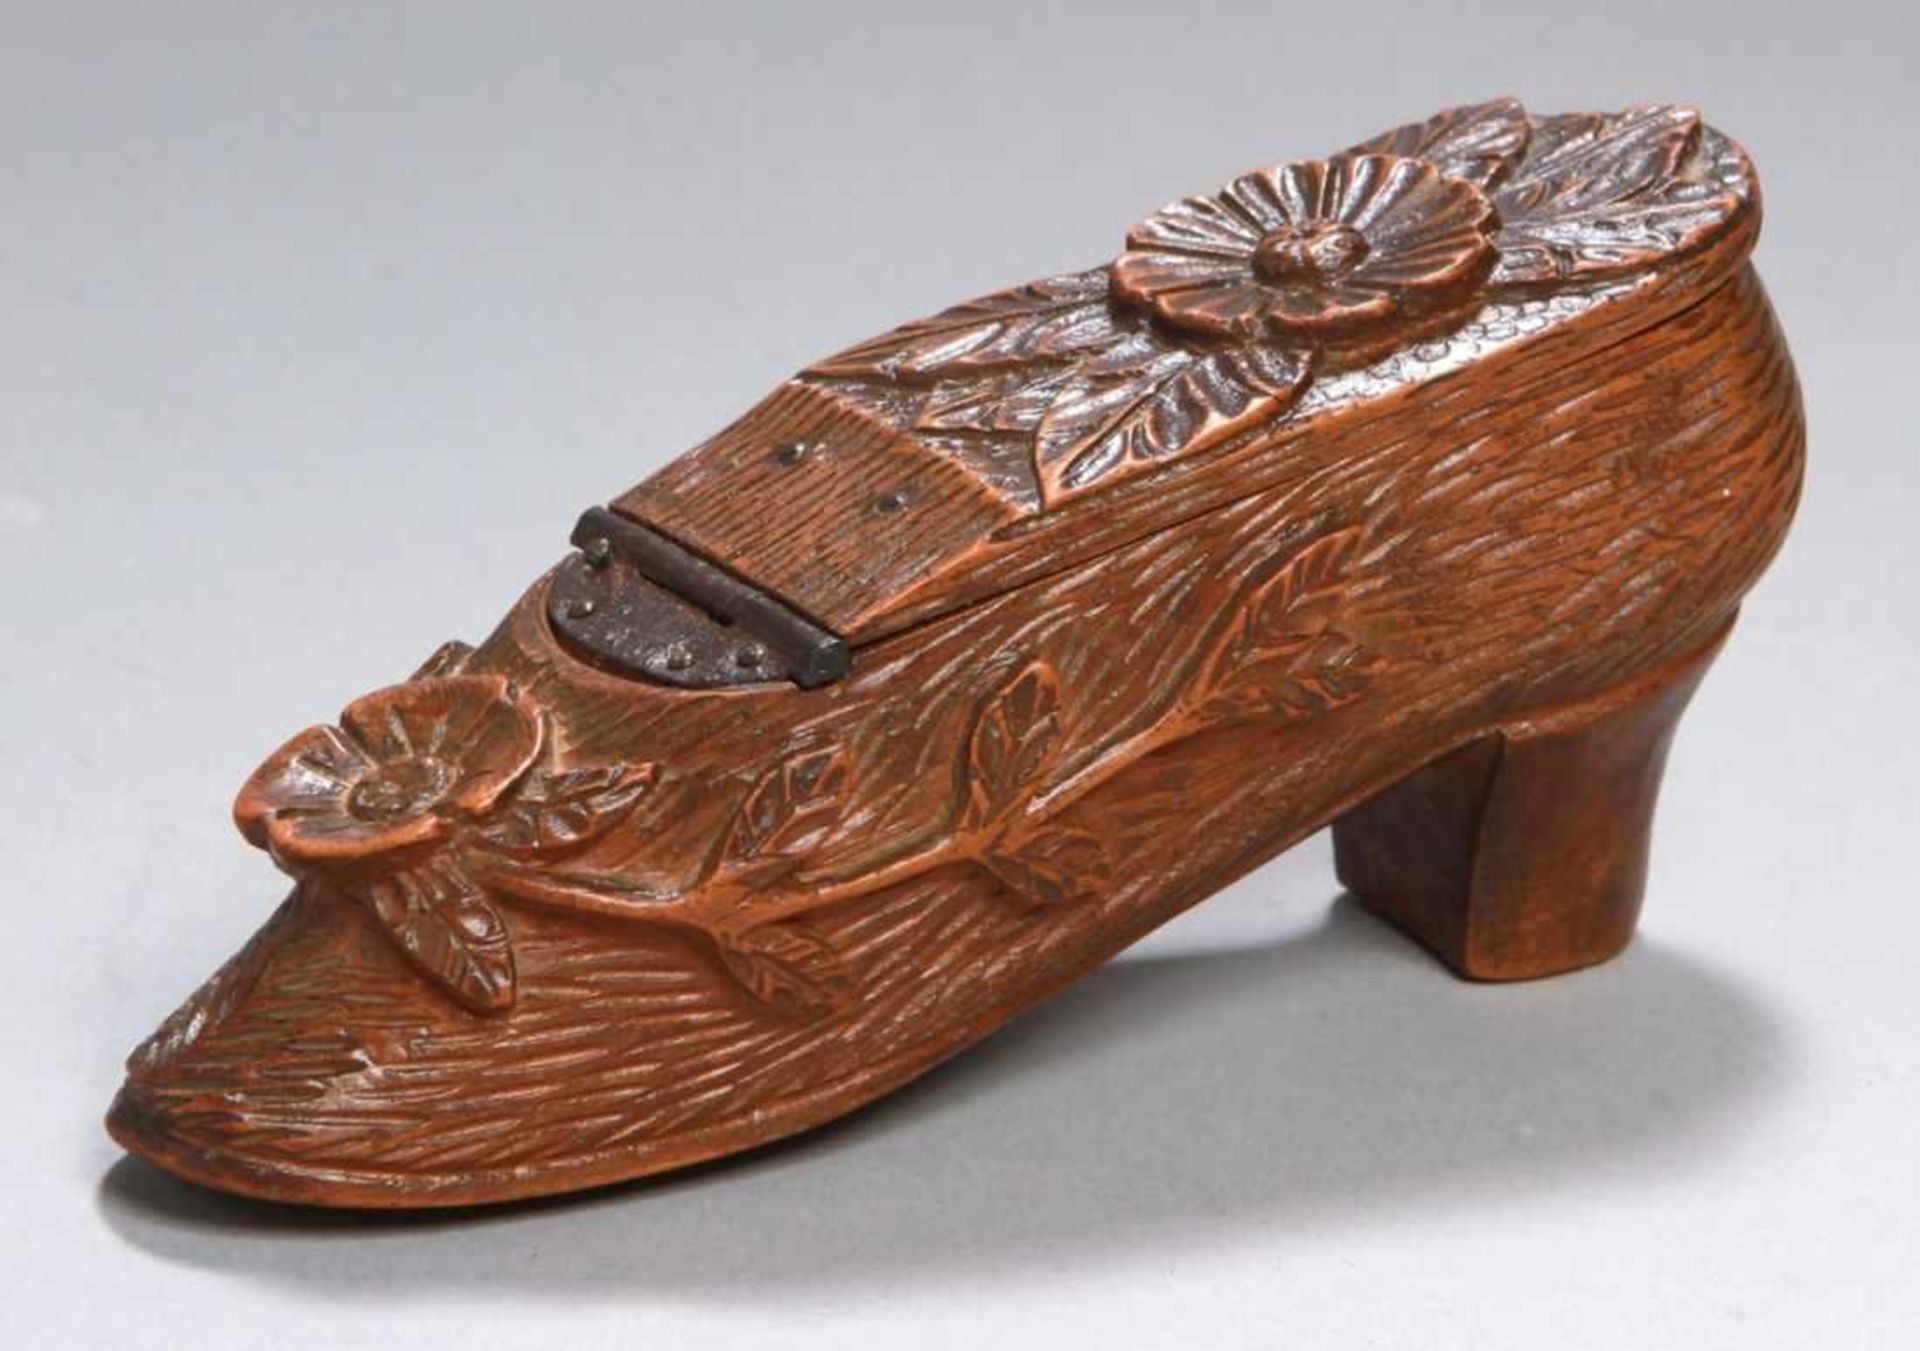 Holz-Tabatiere, "Damenschuh", alpenländisch, 19. Jh., fein beschnitzt, scharnierterDeckel, H 5 cm, L